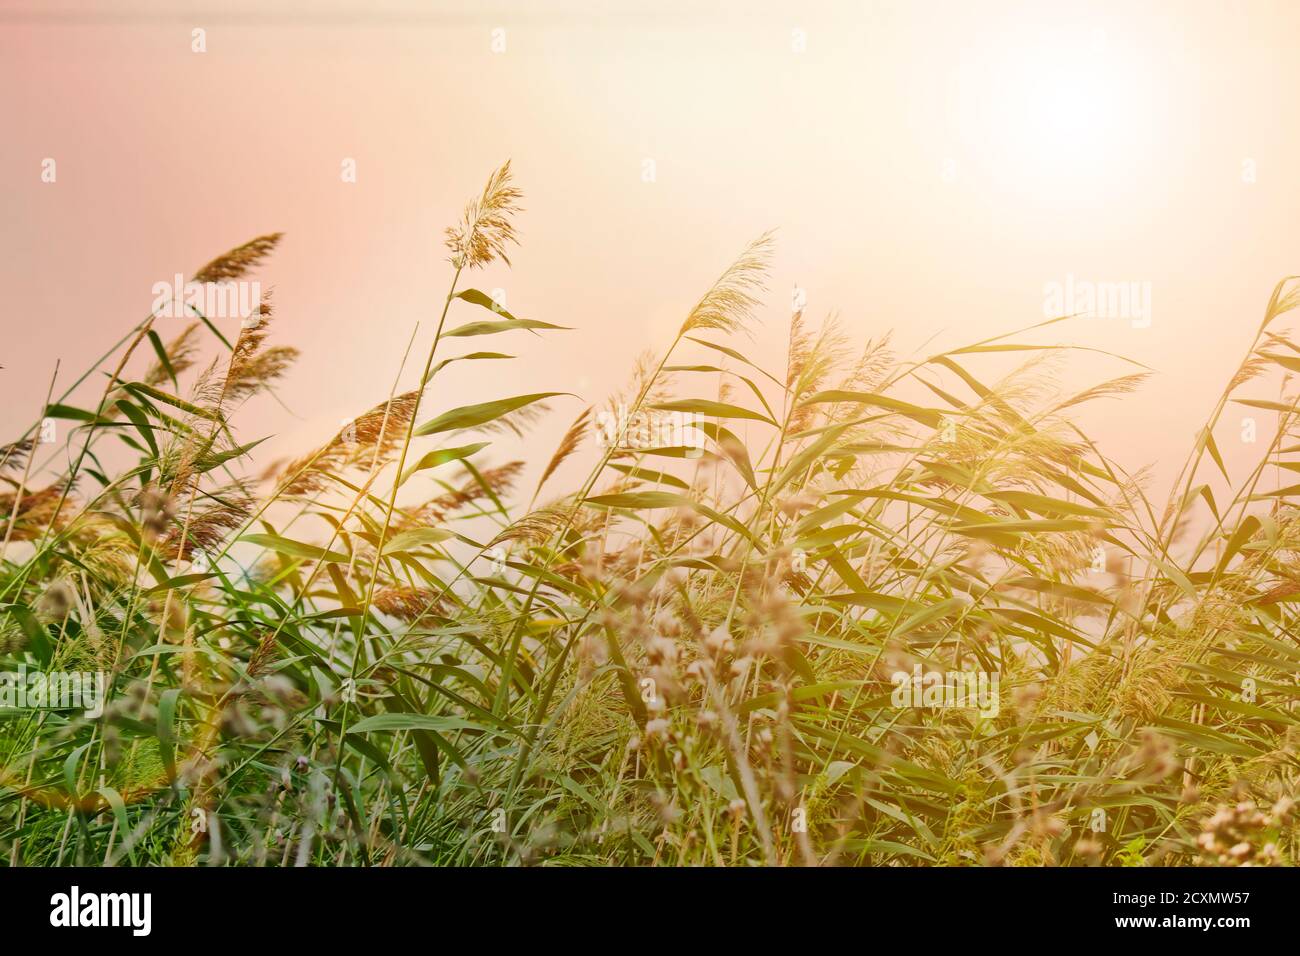 Summer background - lake reeds with panicles of seeds at sunset. Coastal landscape. Stock Photo